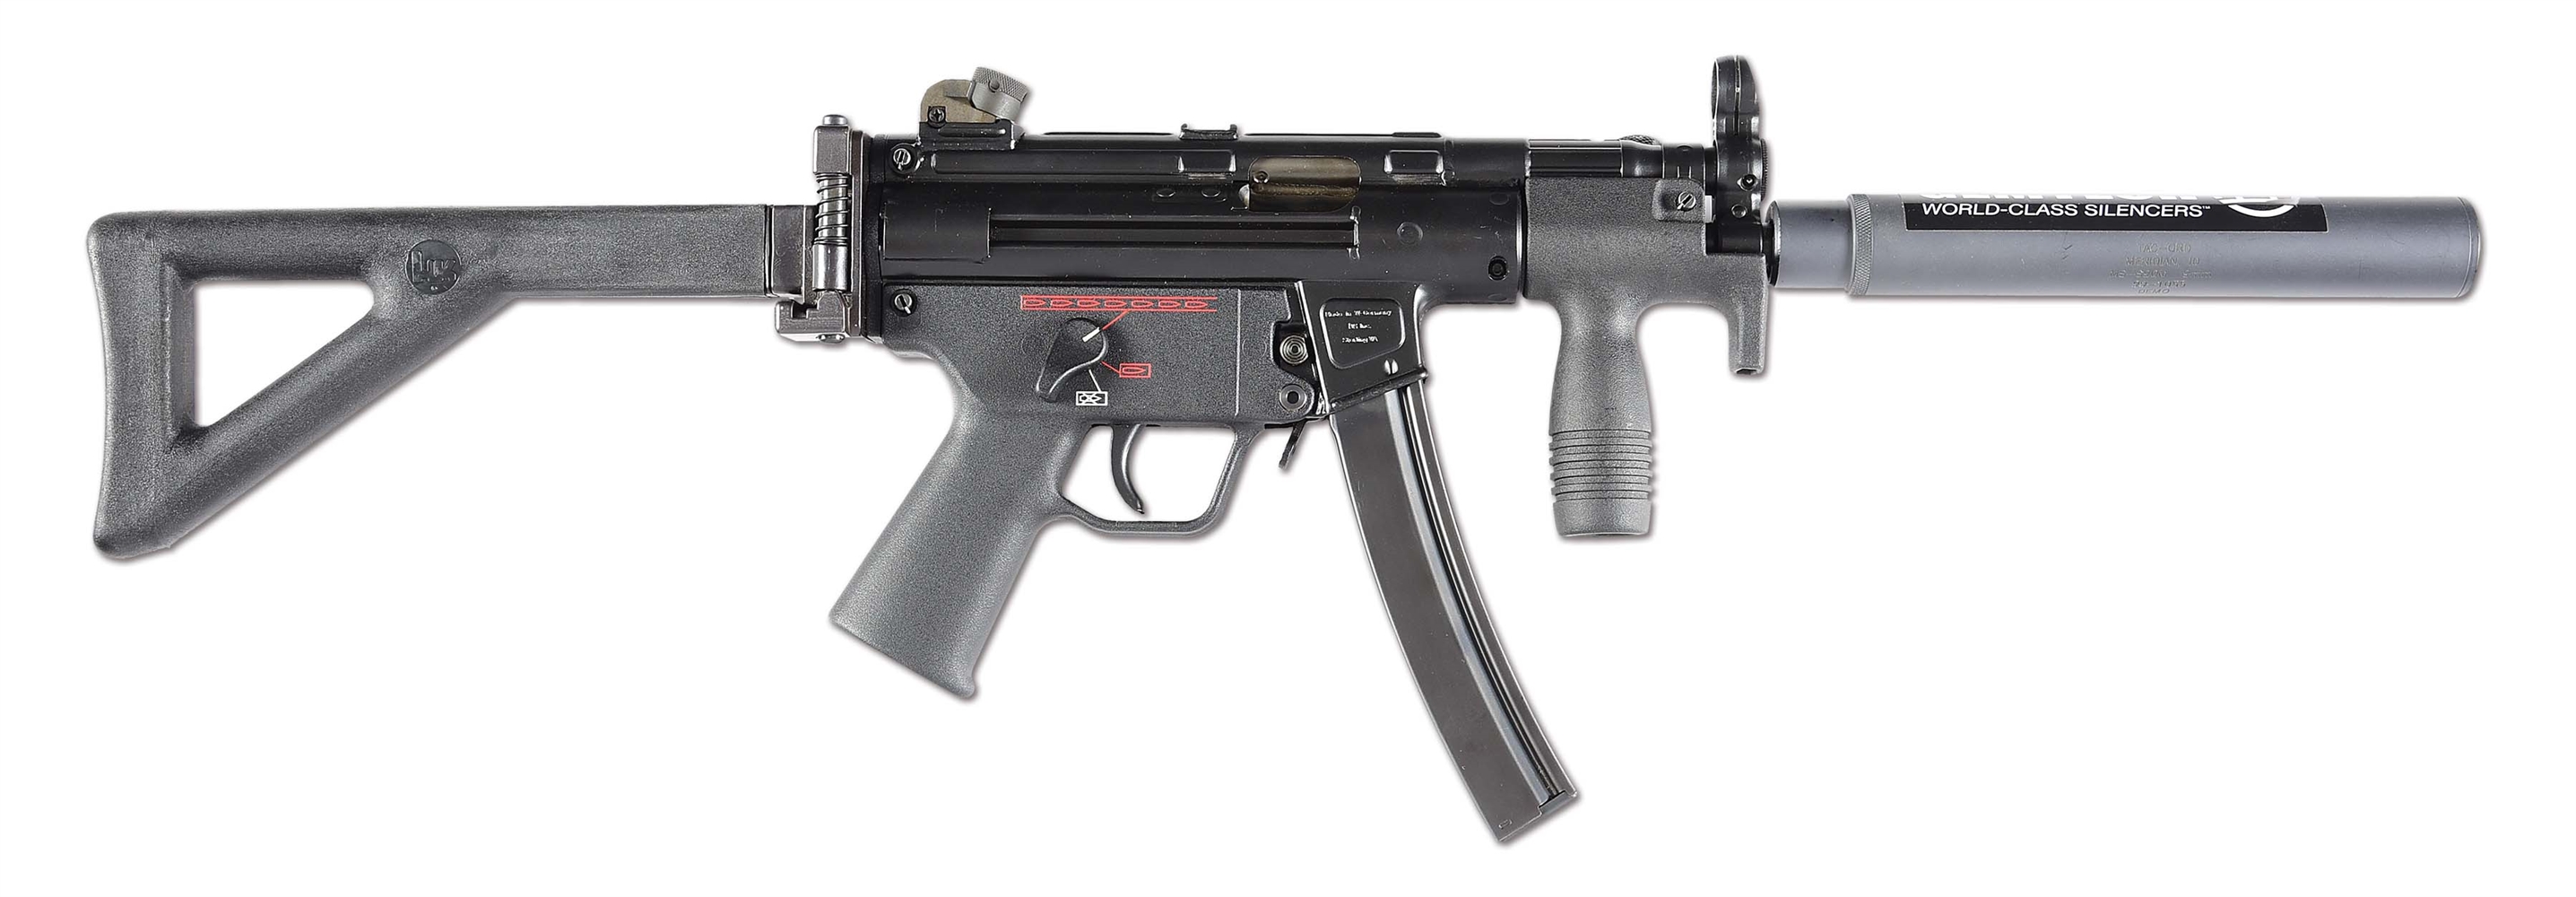 (N) H&K SP-89 HOST GUN WITH FLEMING FIREARMS AUTO SEAR PACK MACHINE GUN & TAC ORDNANCE TRI-LUG SUPPRESSOR (FULLY TRANSFERABLE).